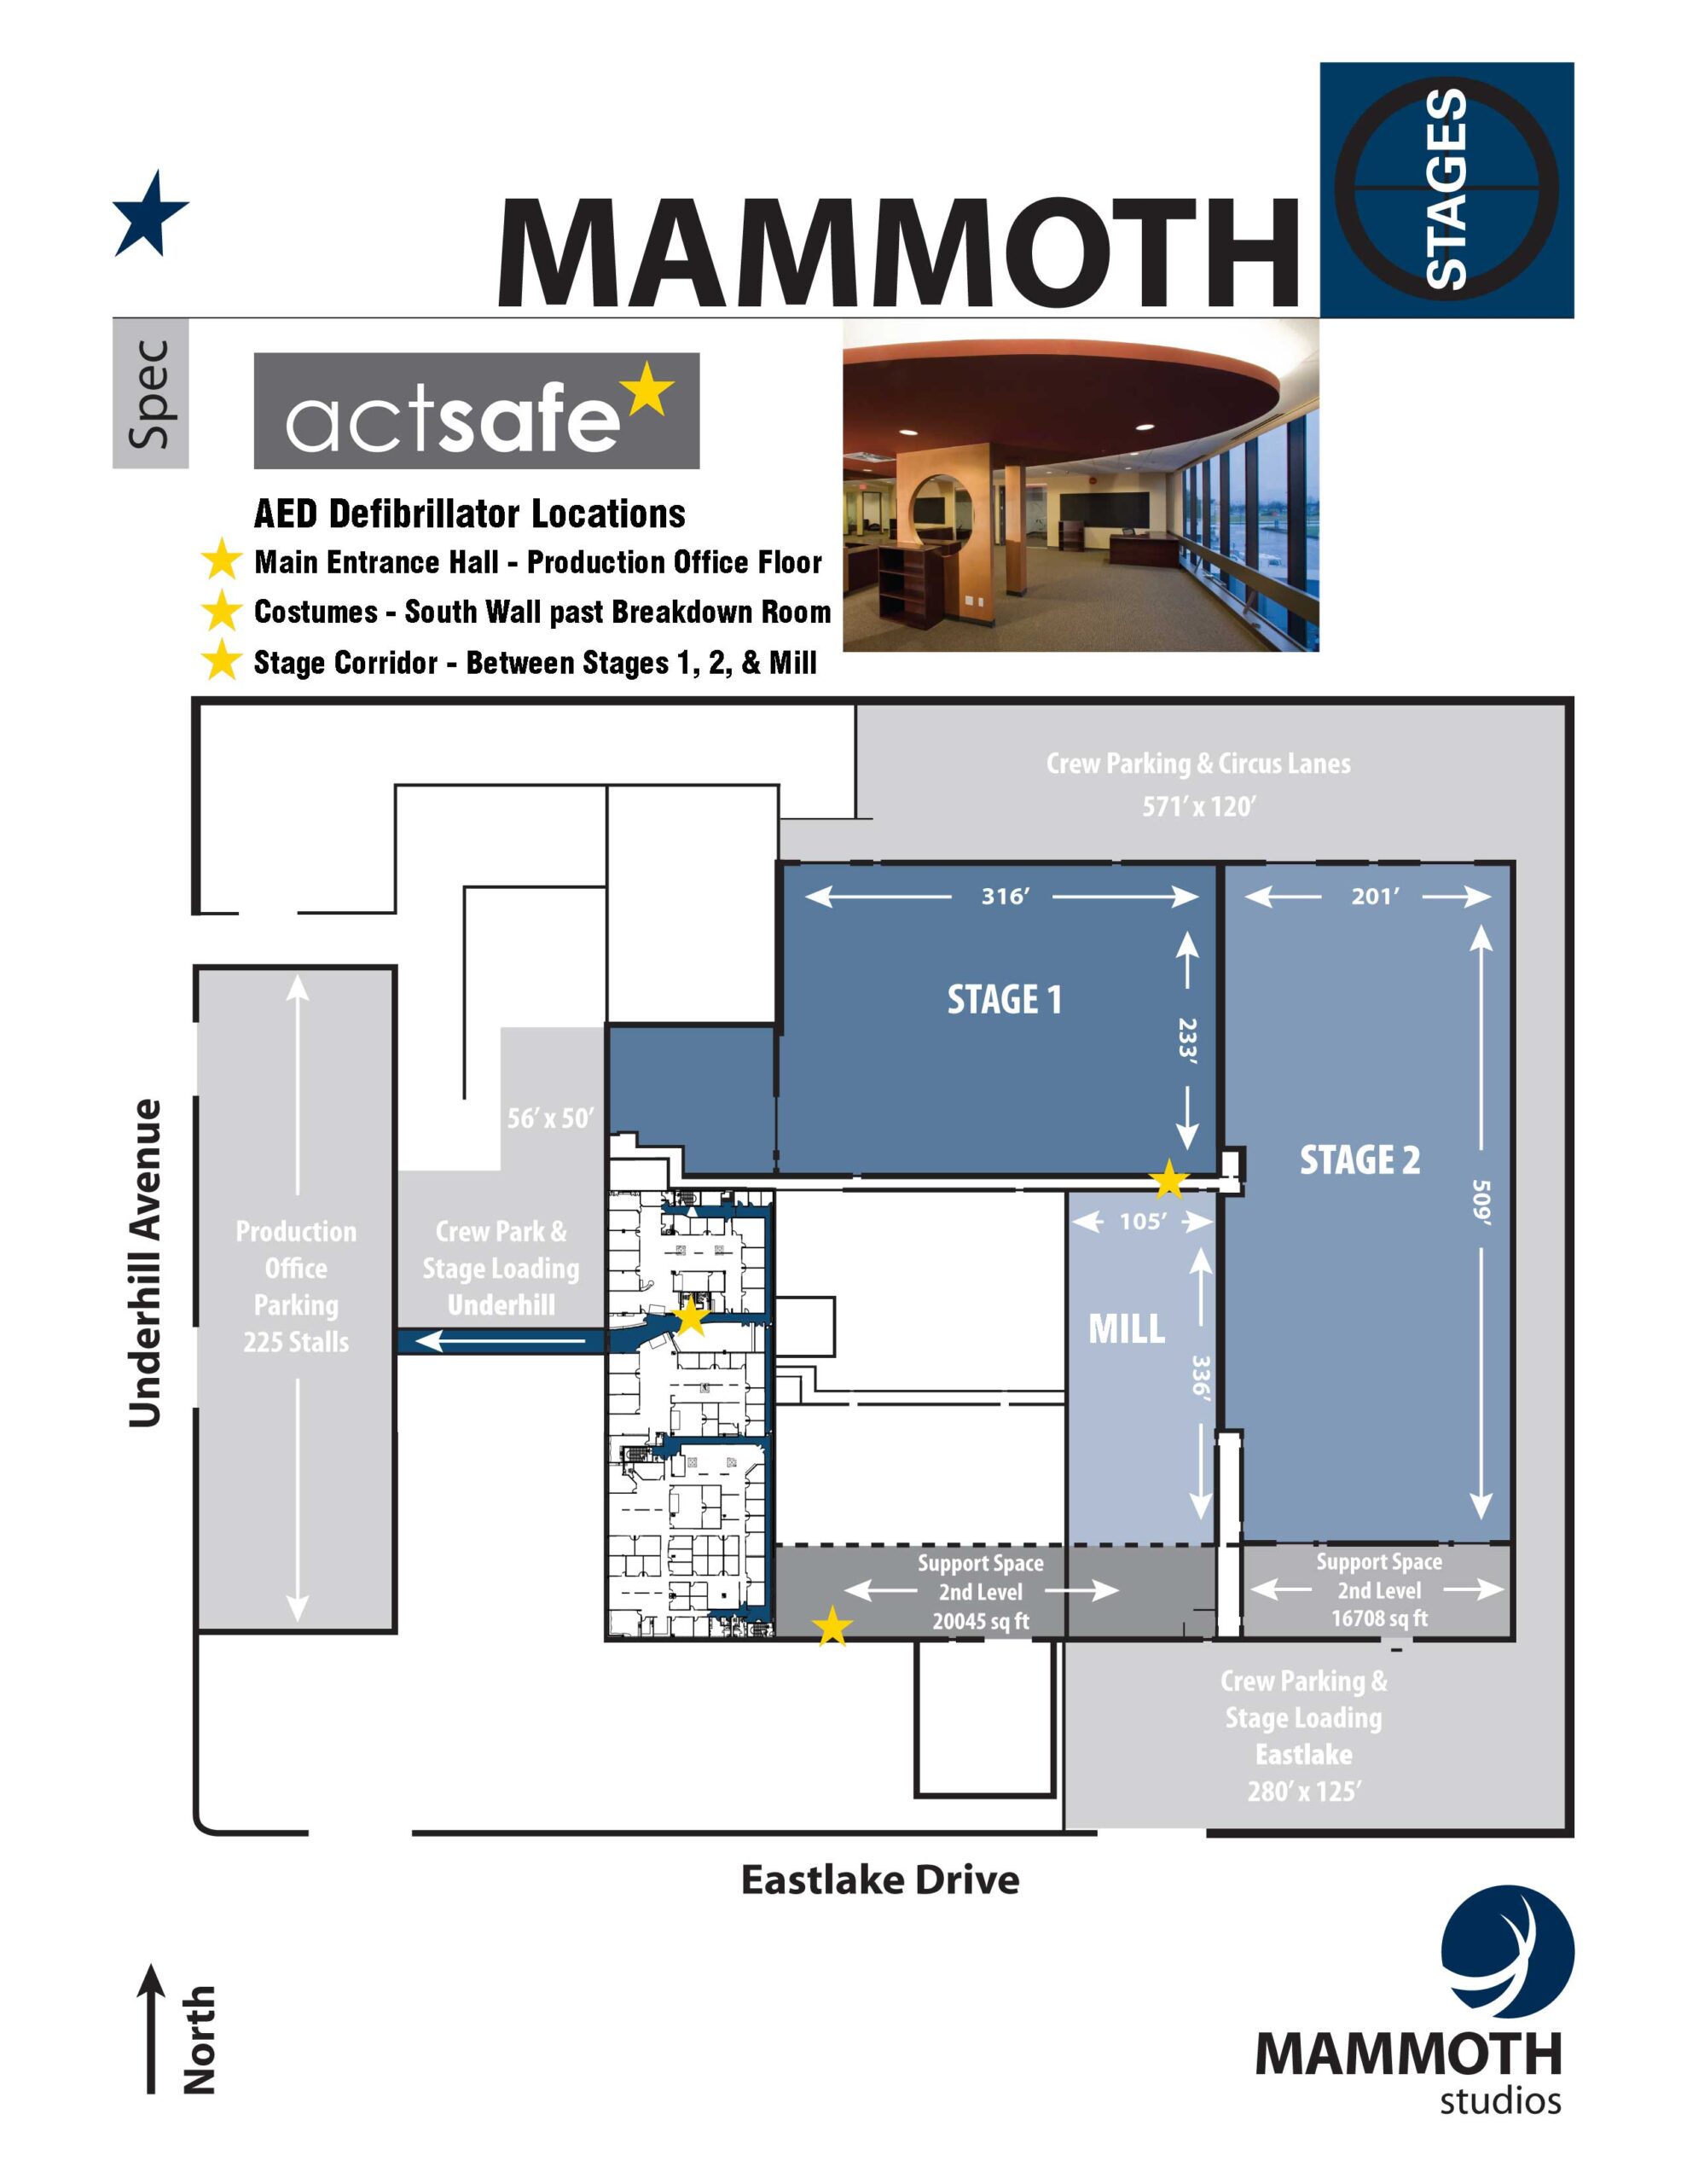 AED locations at Mammoth Studios.